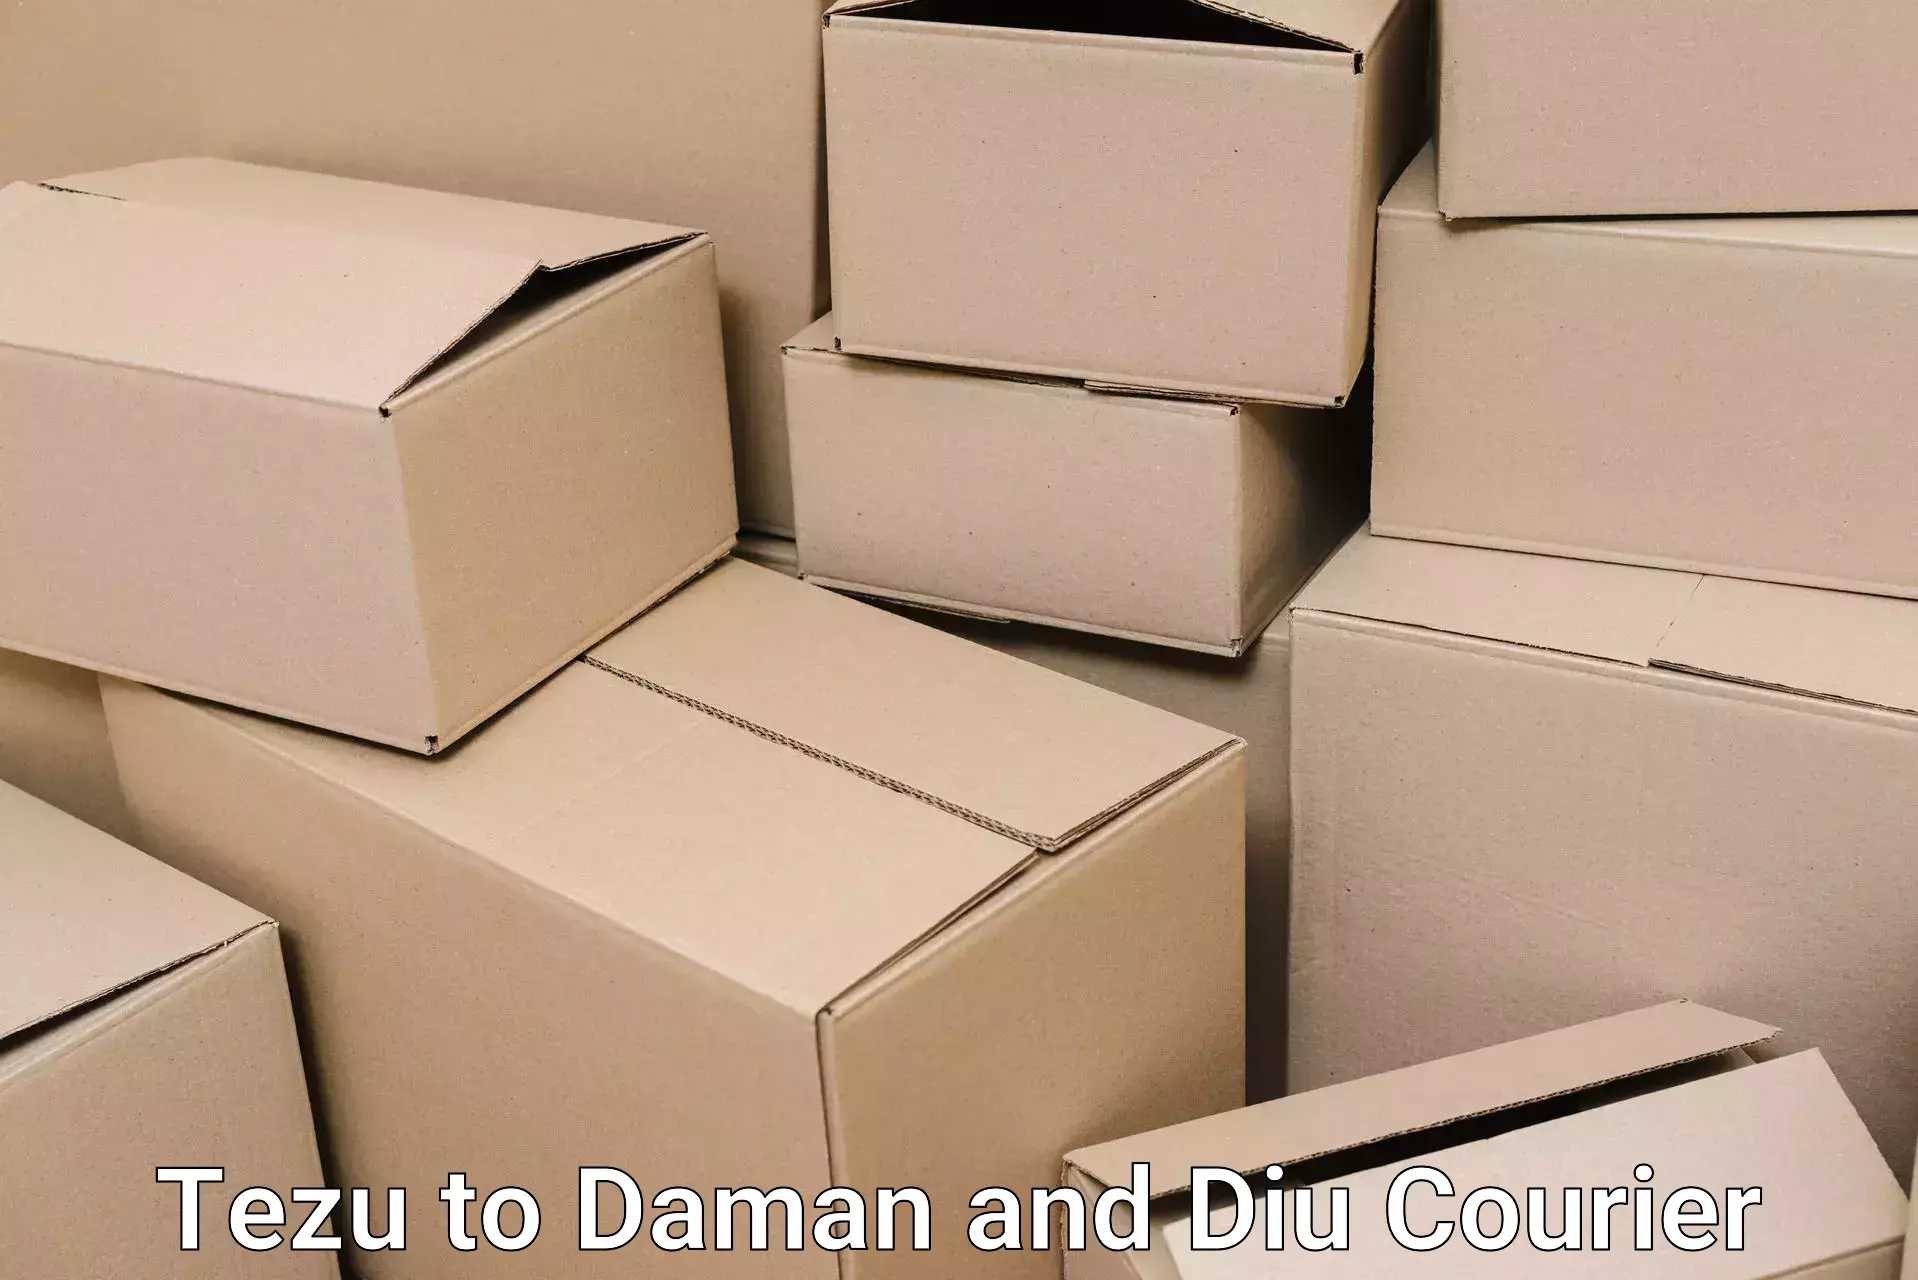 Professional moving company Tezu to Daman and Diu